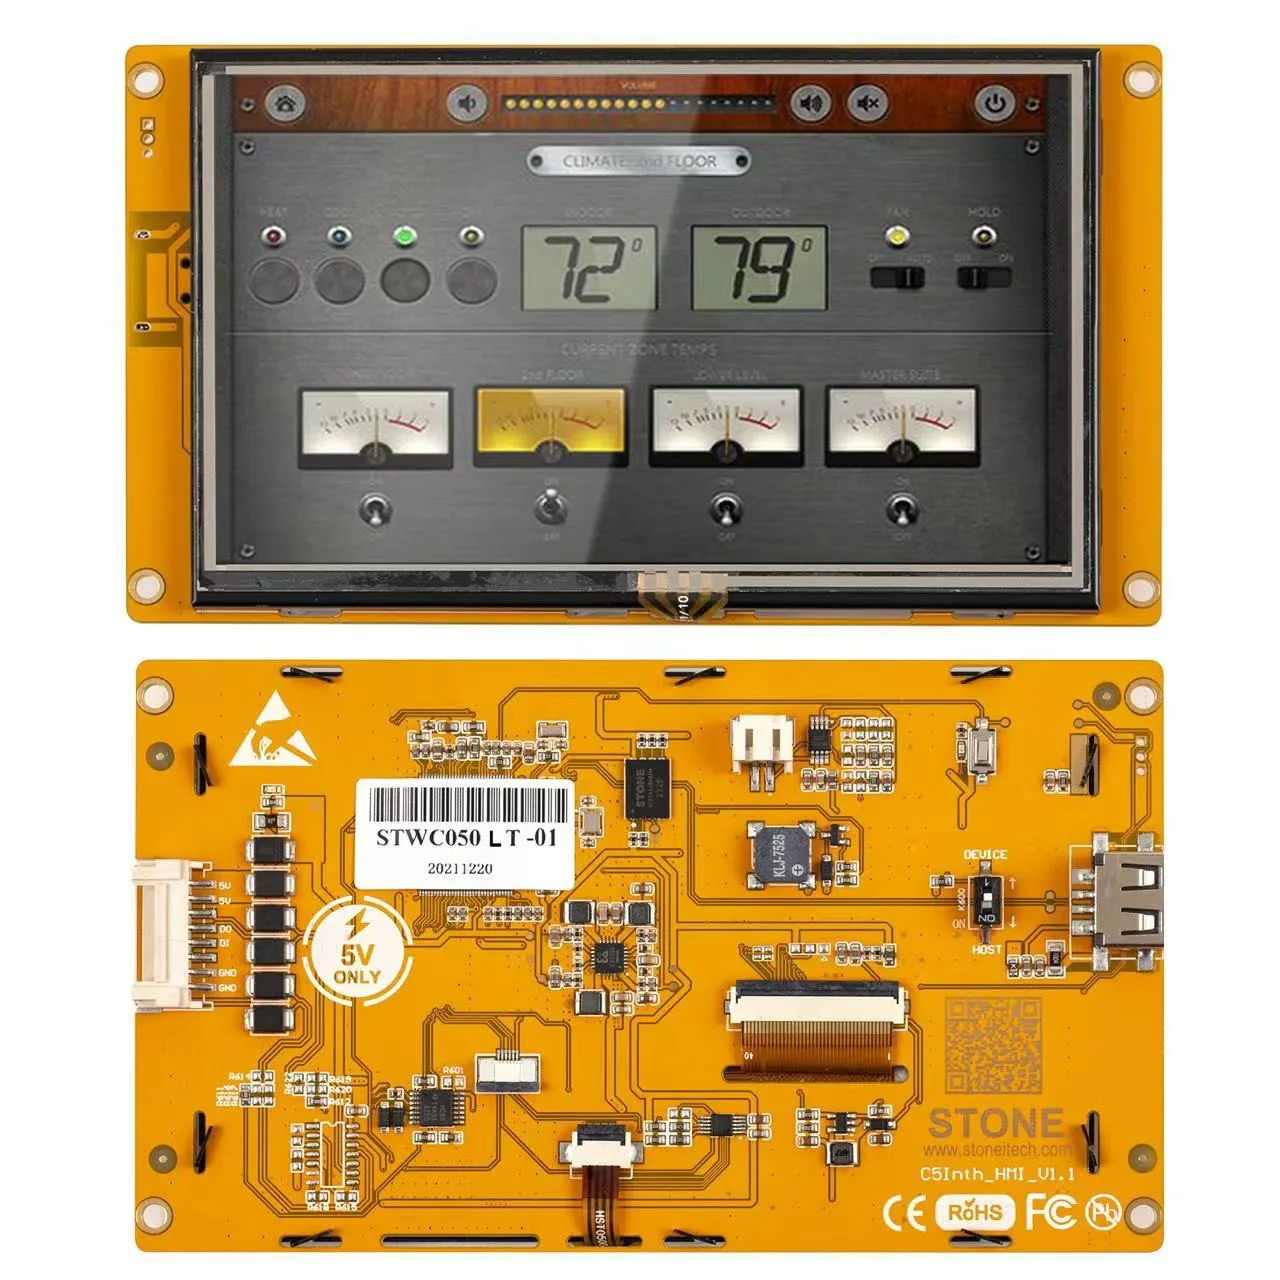 Stone 5 Smart HMI LCD Flash Memory UART port power supply ready-made Basic Control Program and Powerful Design Software